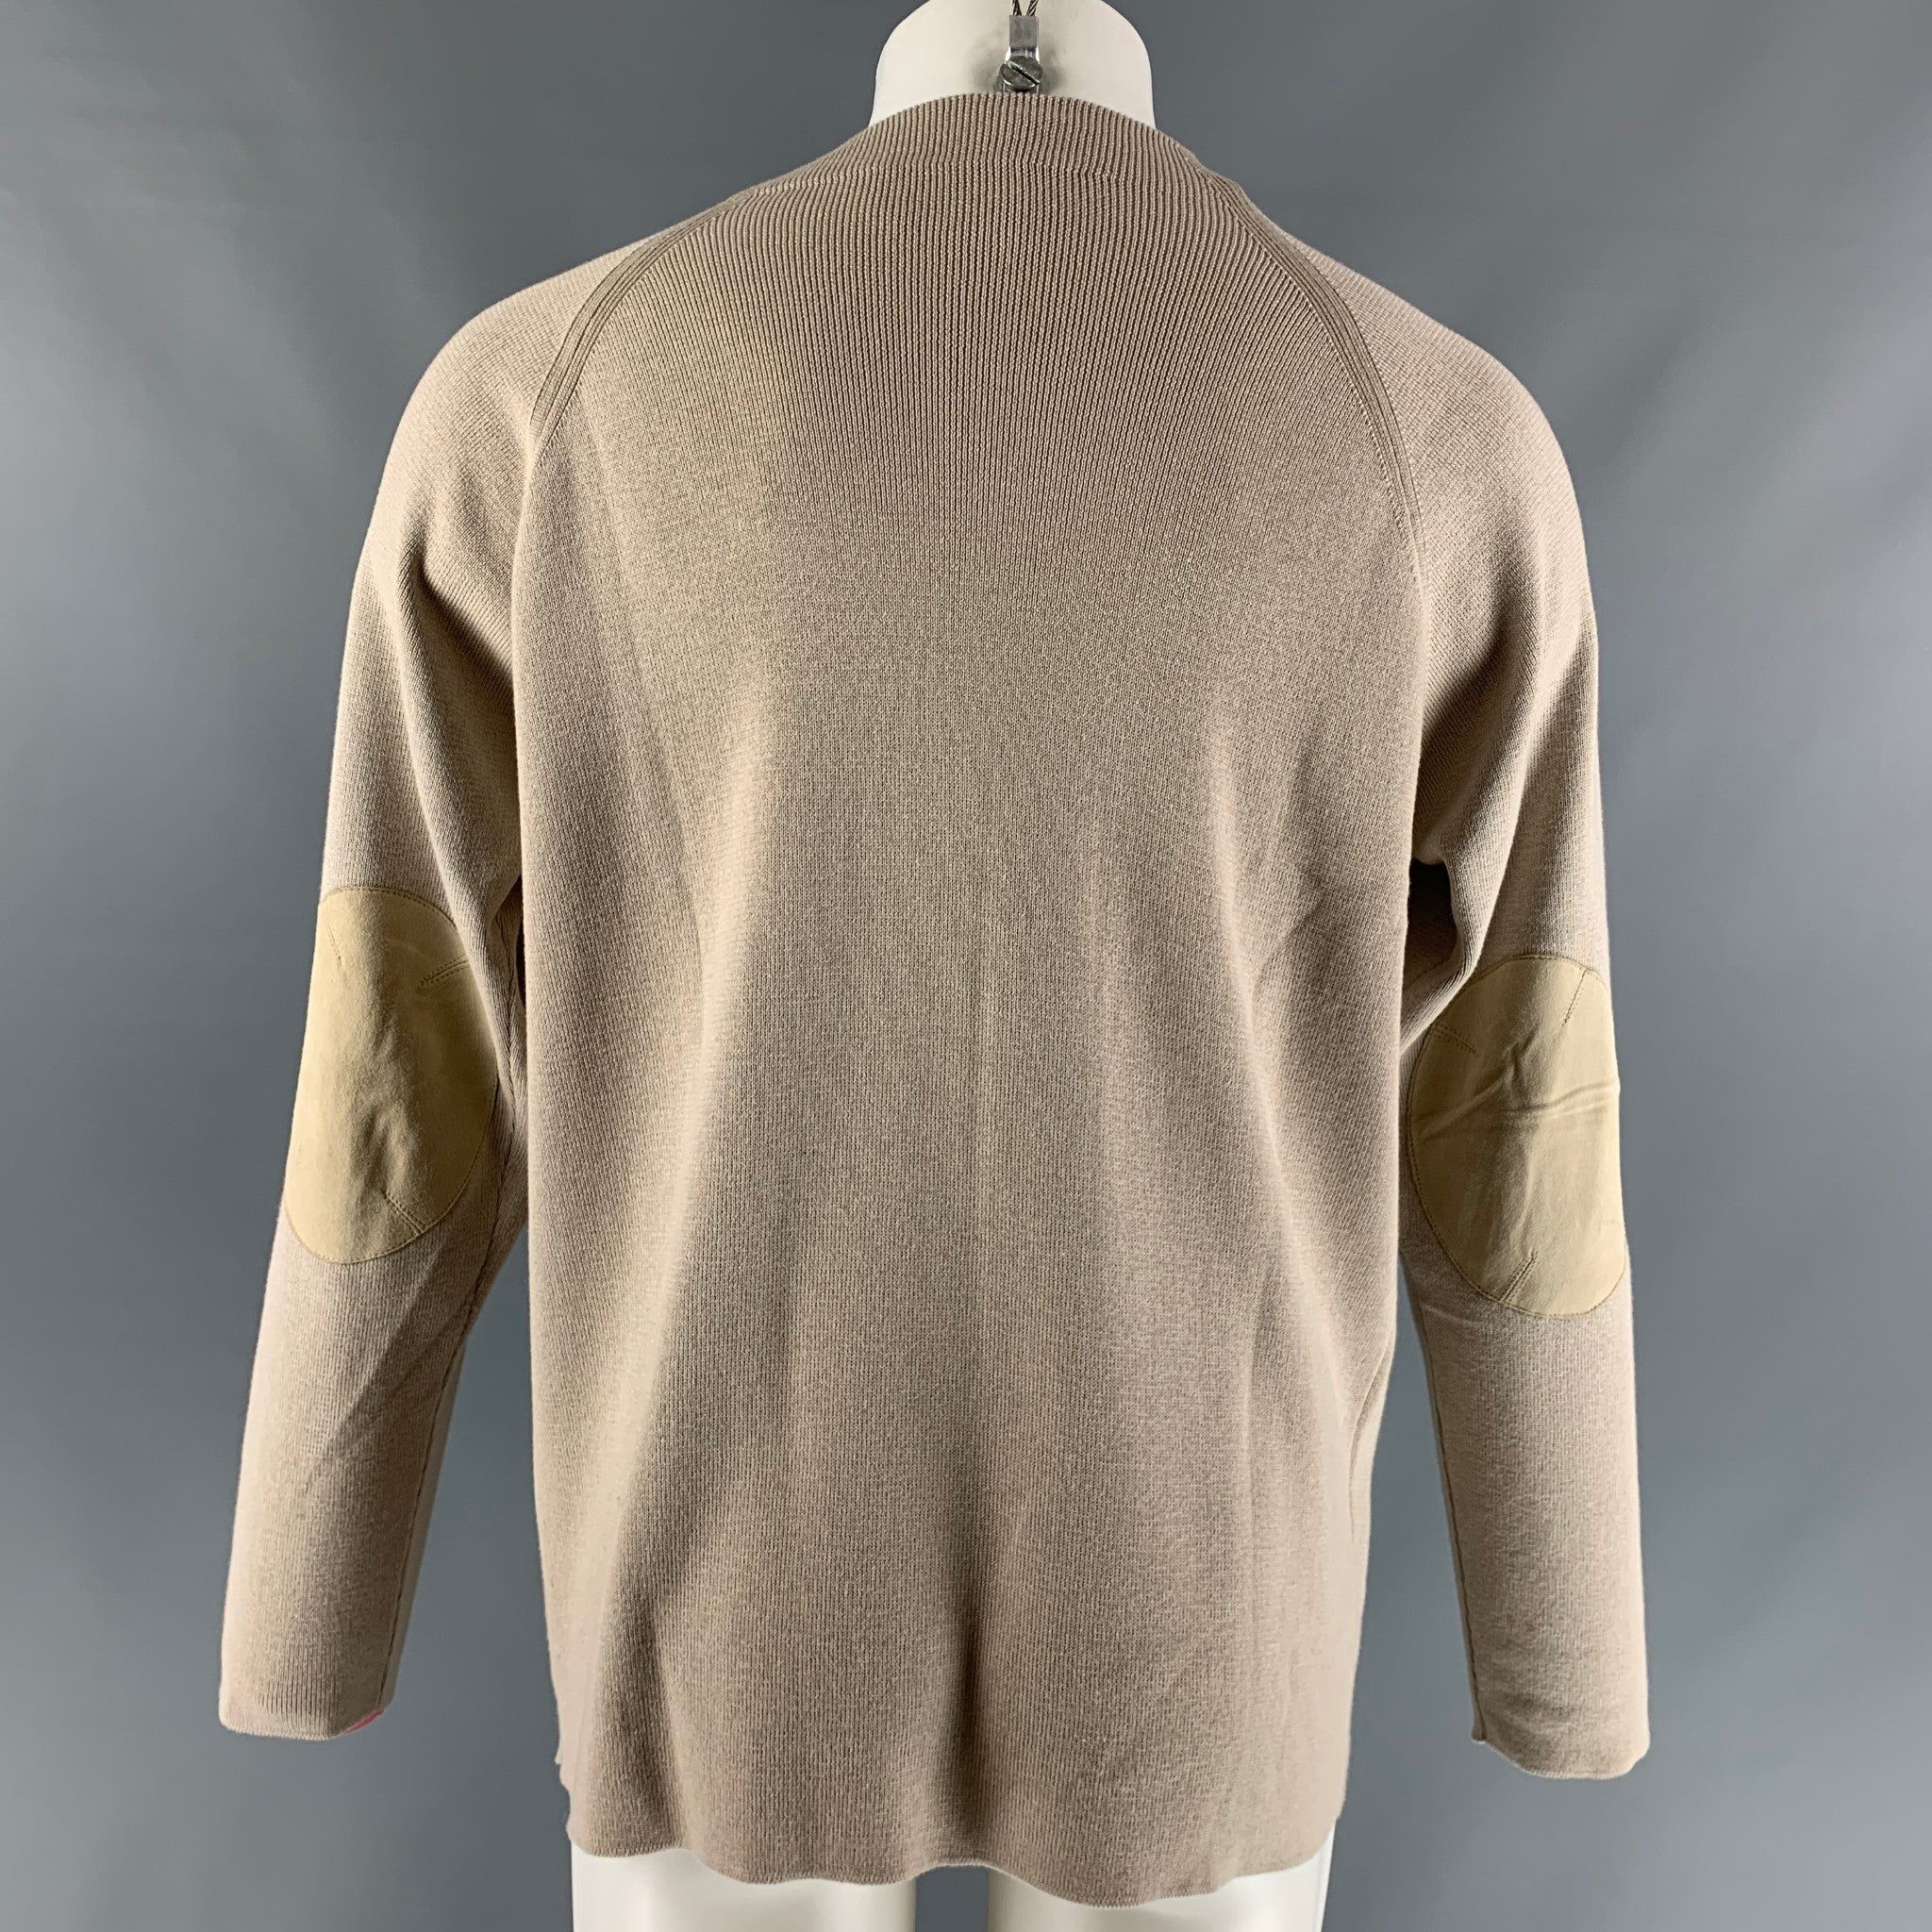 Salvatore Ferragamo Oatmeal Knitted Cotton & Cashmere Jacket Size US M / EU 48-50 / 2 - 4 Thumbnail